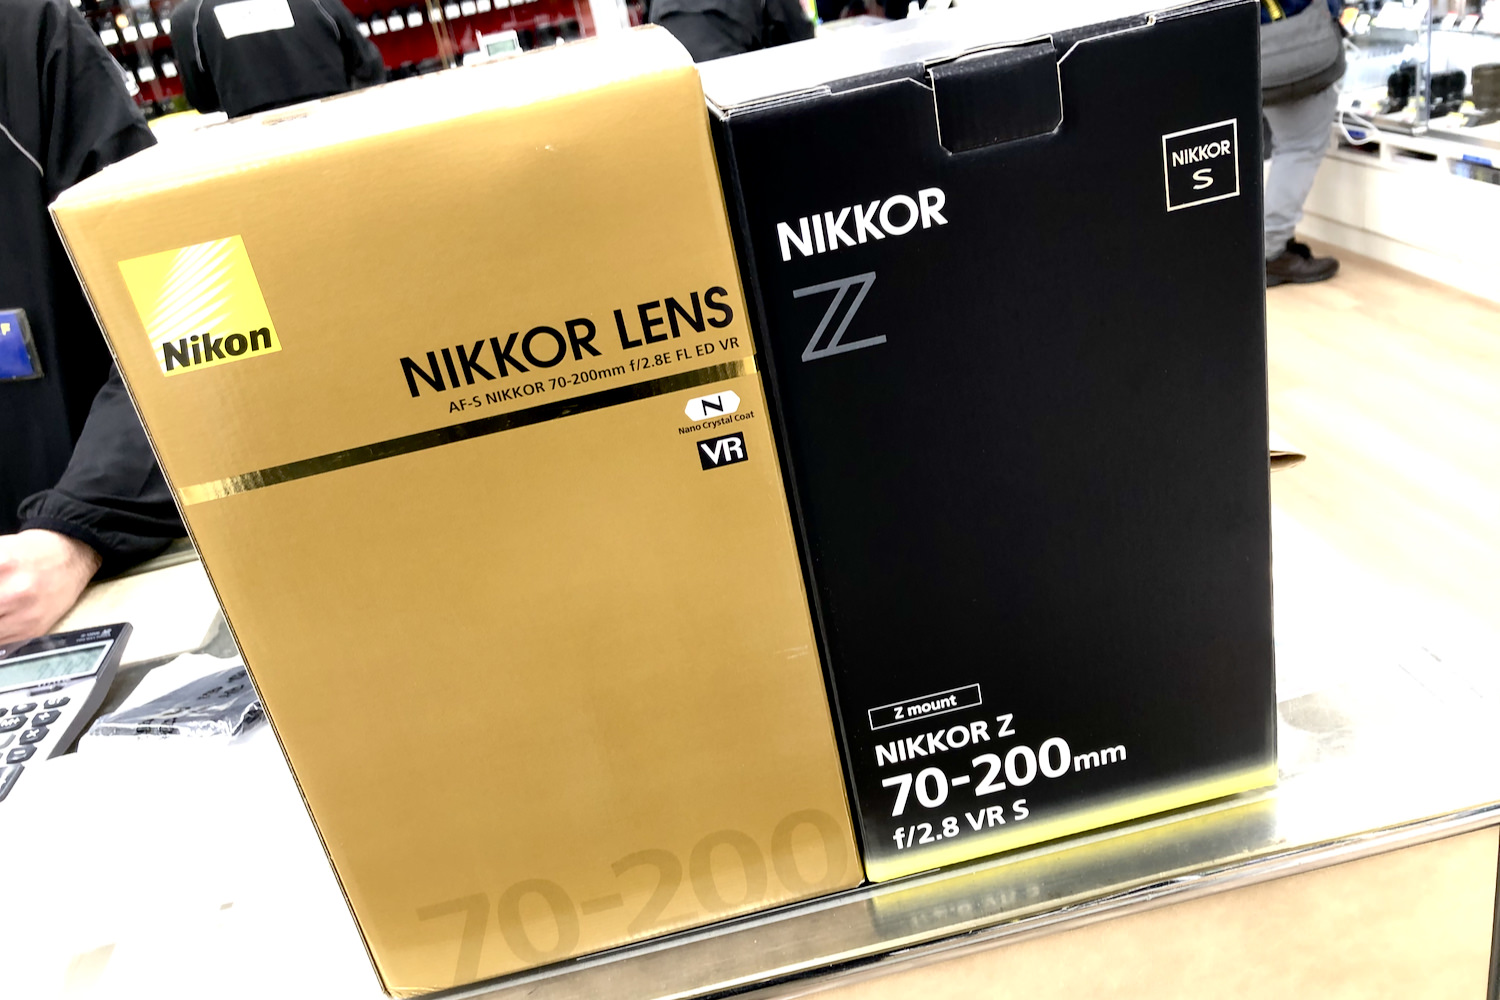 NIKKOR Z 70-200mm f/2.8 VR S